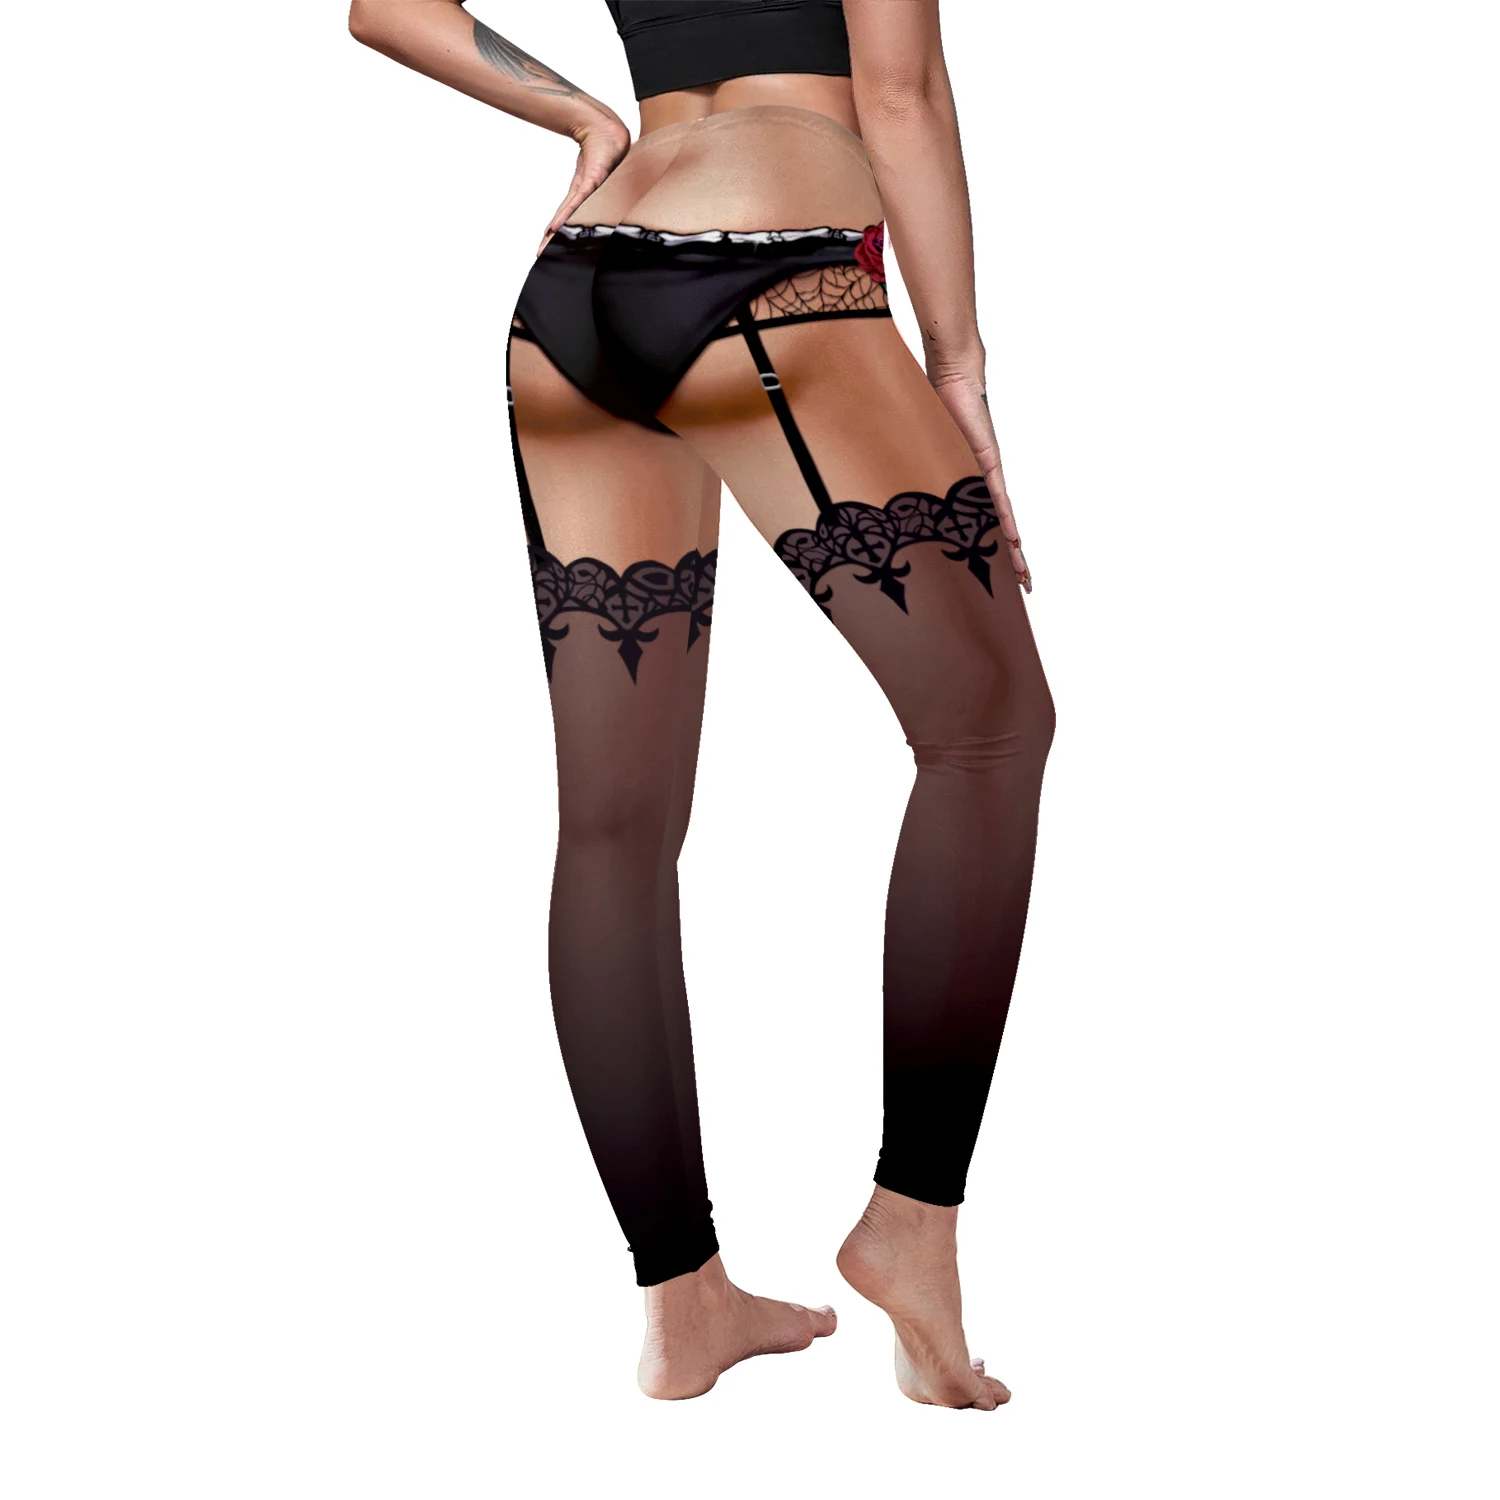 [You're My Secret] 2021 Summer Sexy Leggiing For Fitness Women High Waist 3D Printed Legins Halloween Party High Spandex Pants